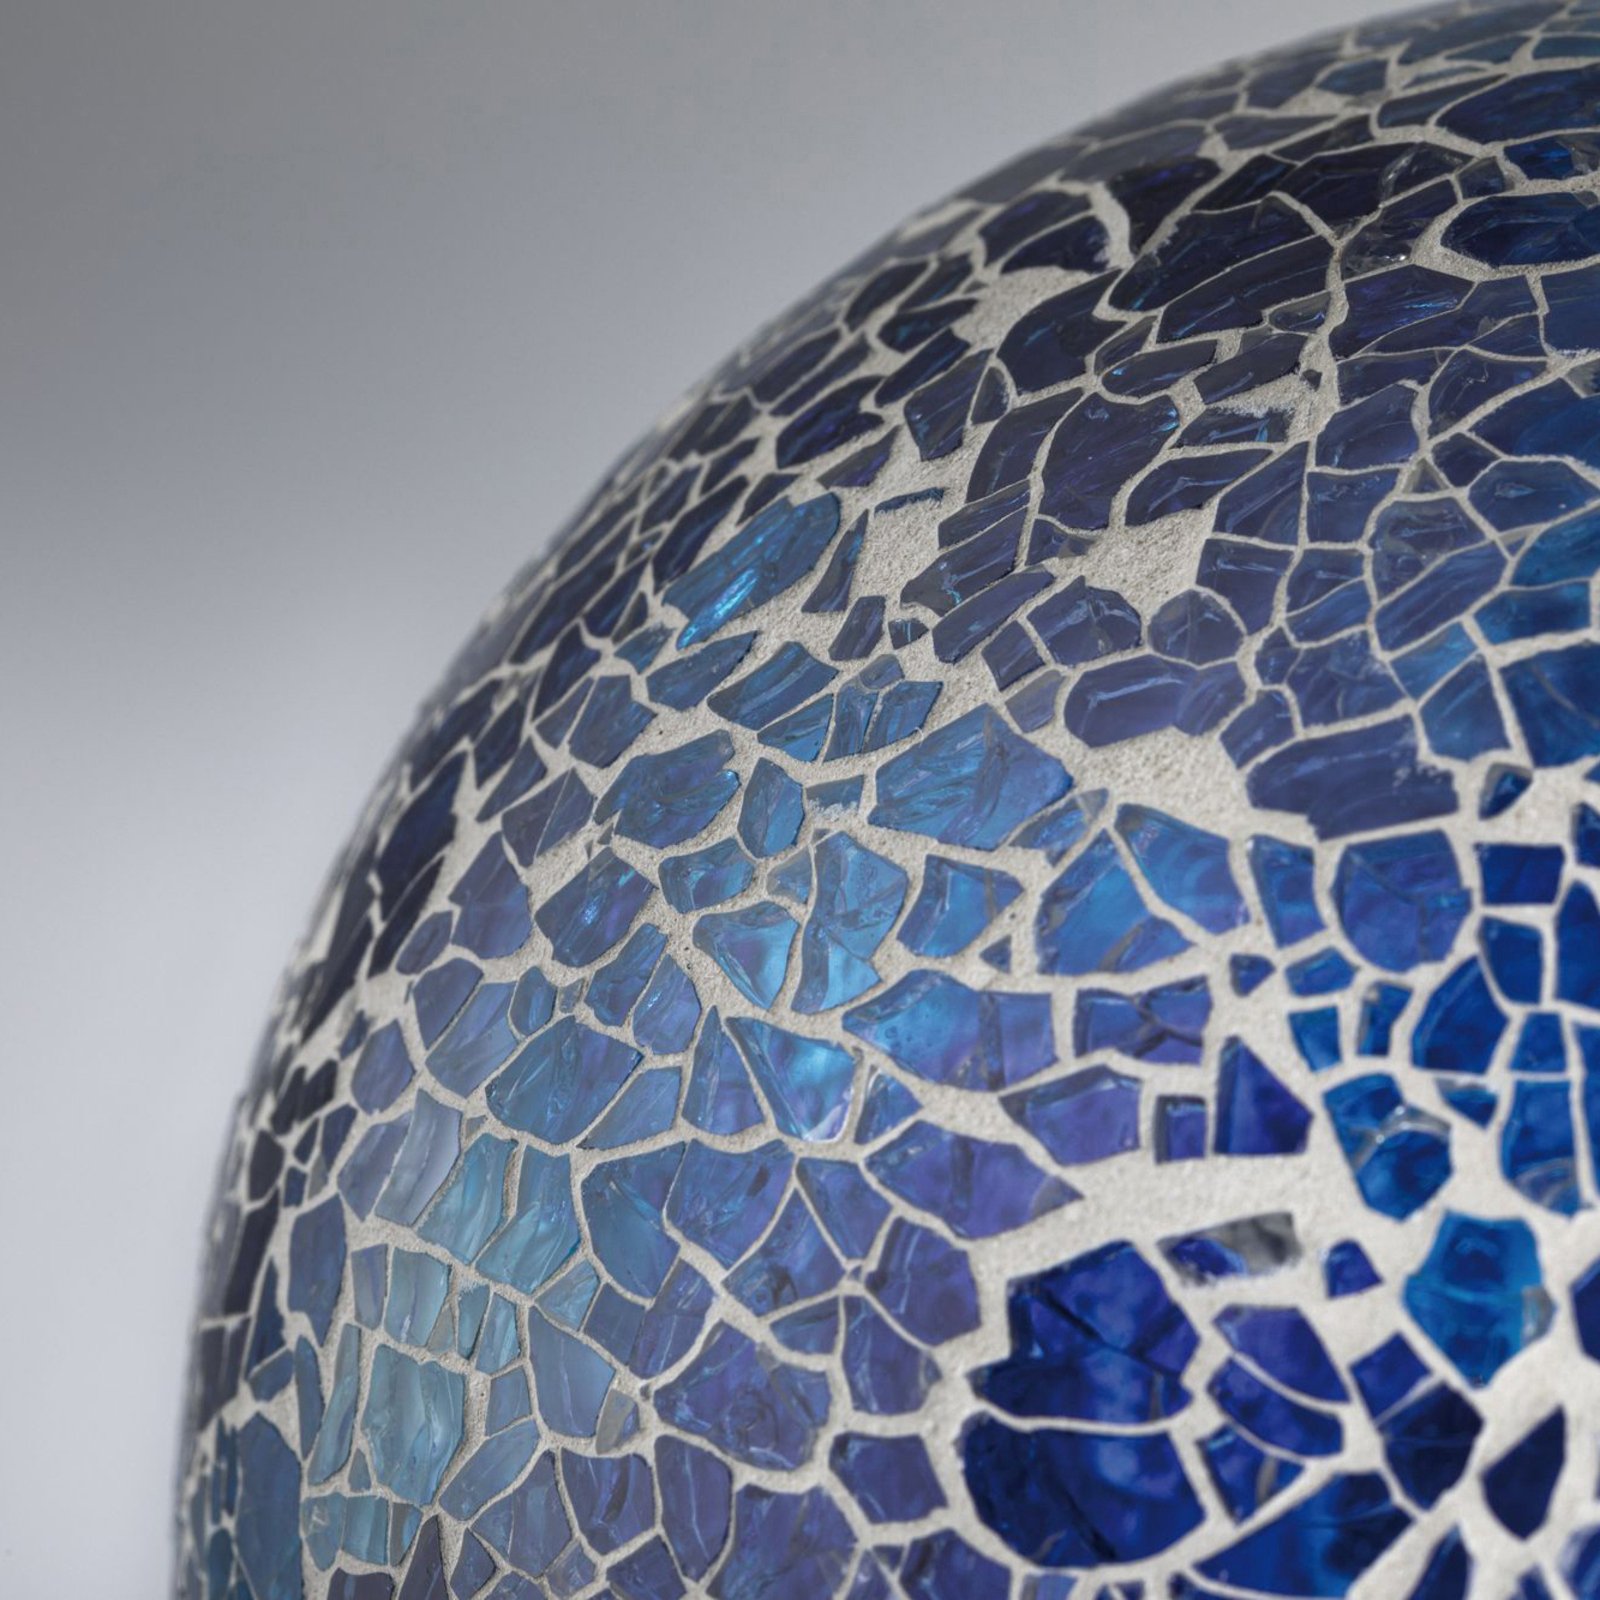 Paulmann E27 Globe LED 5W Miracle Mosaic niebieska